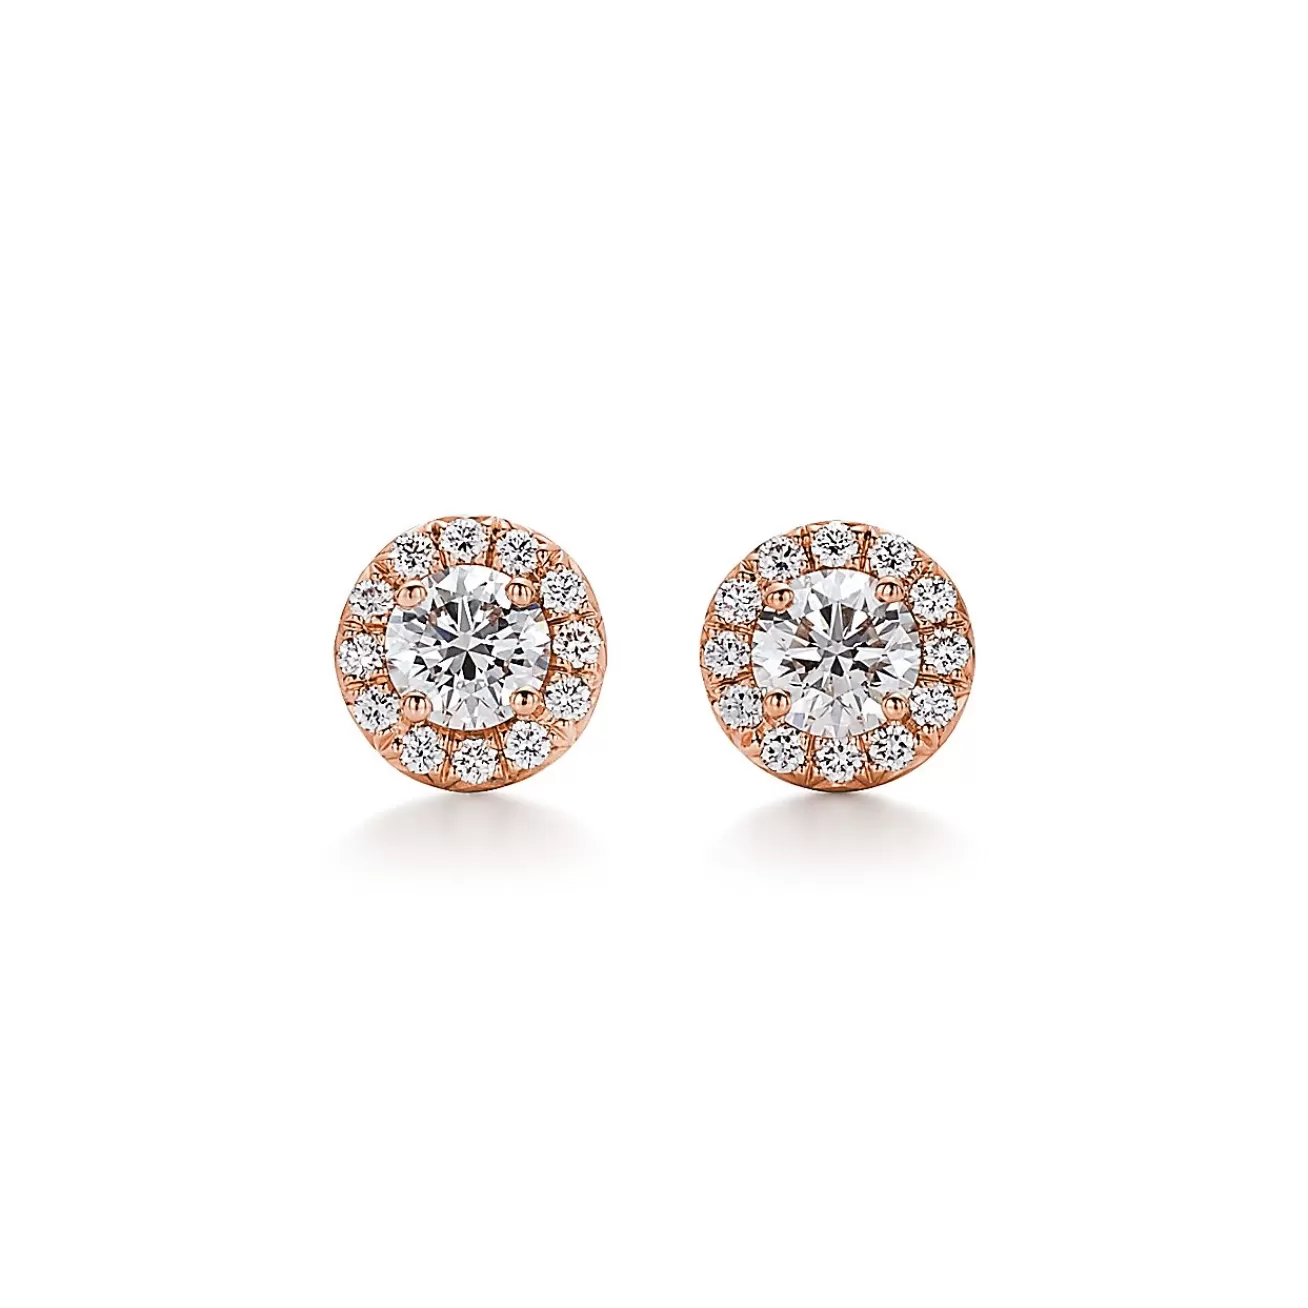 Tiffany & Co. Tiffany Soleste® earrings in 18k rose gold with diamonds. | ^ Earrings | Gifts for Her